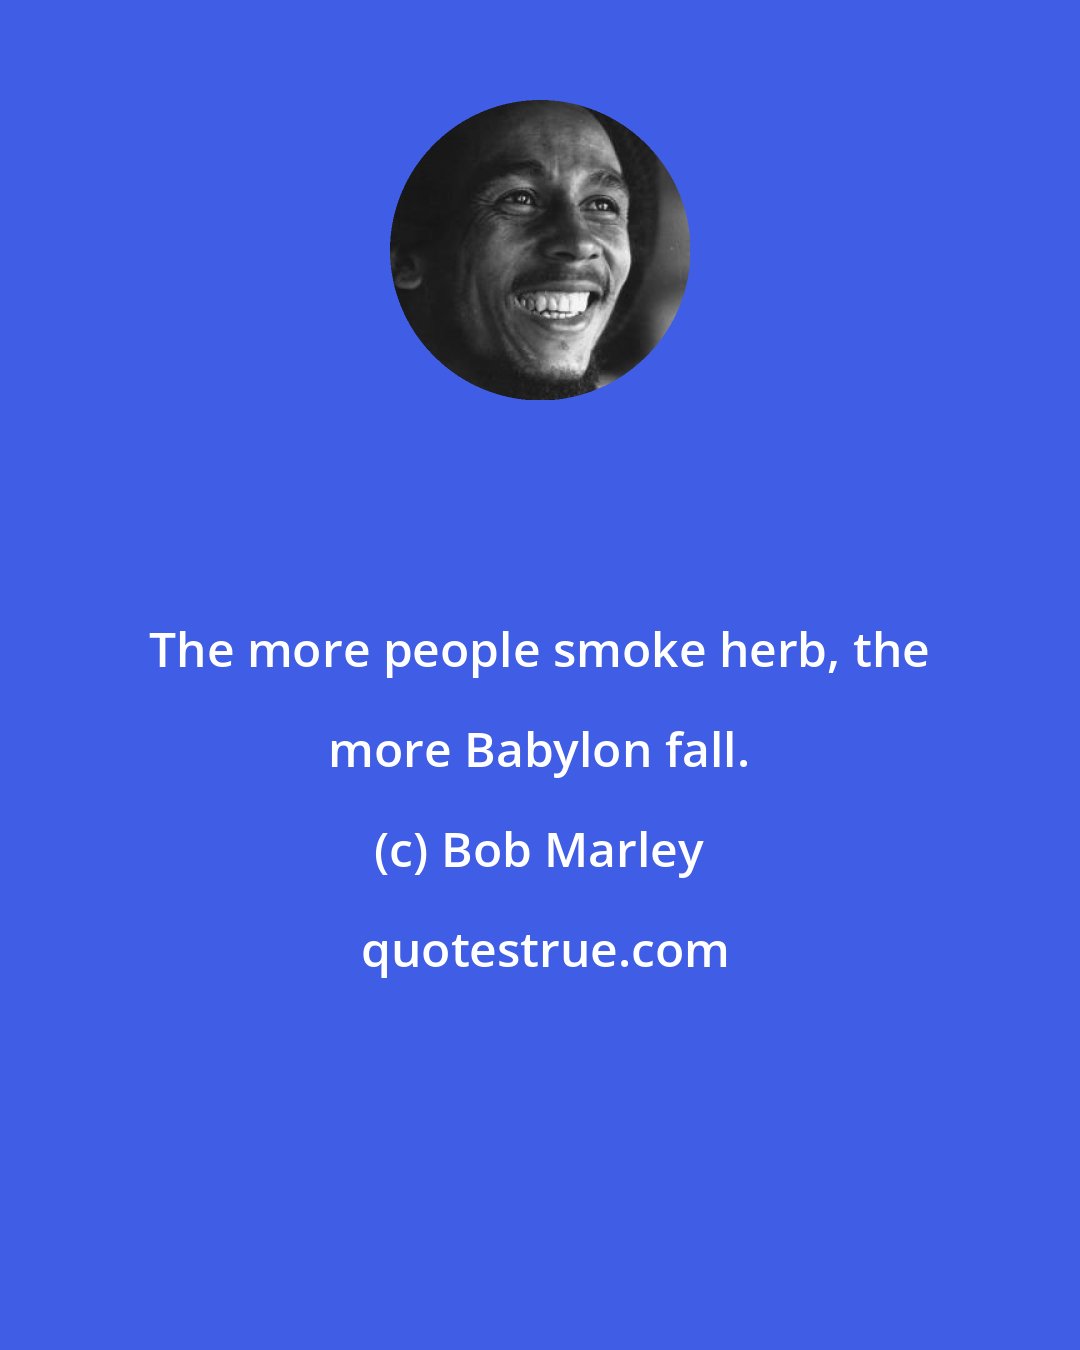 Bob Marley: The more people smoke herb, the more Babylon fall.